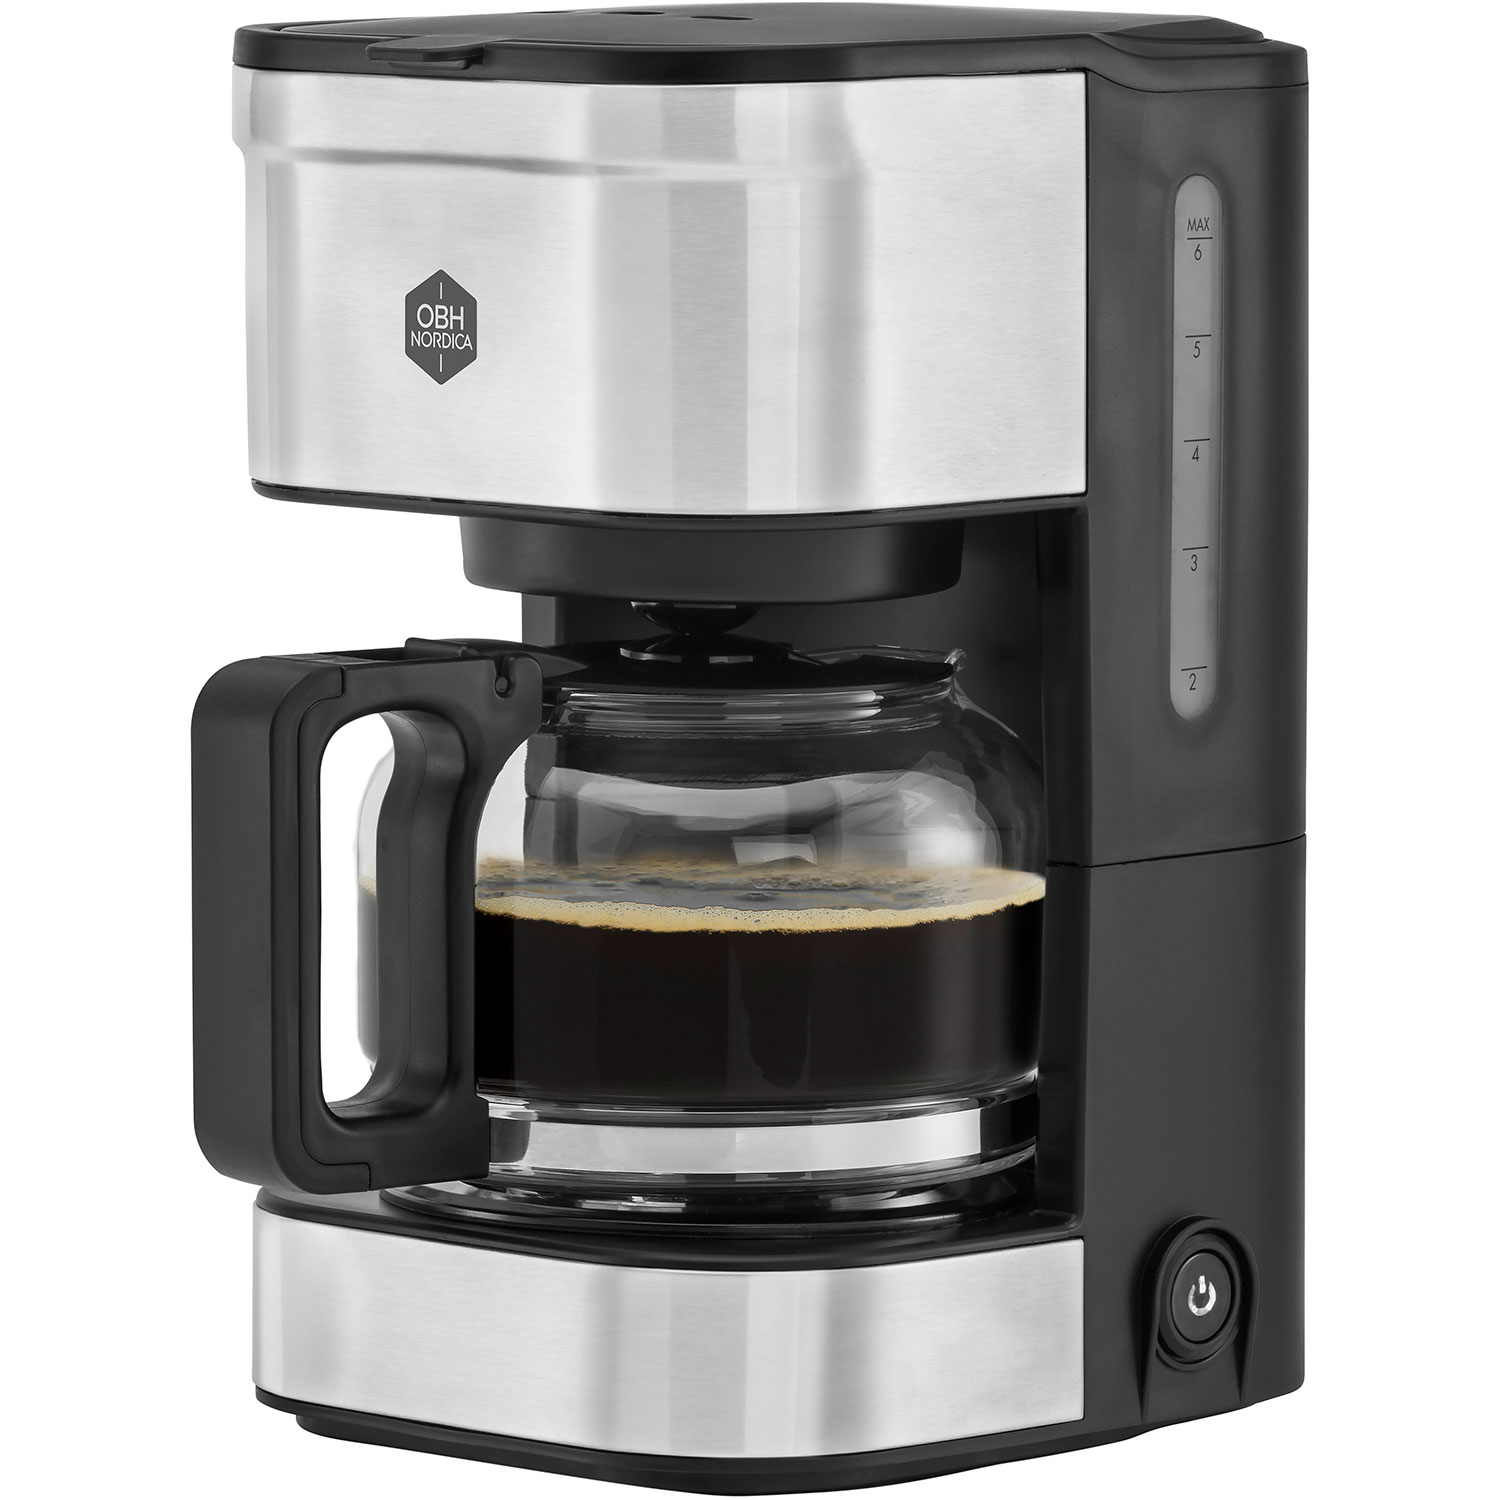 https://royaldesign.se/image/1/obh-nordica-coffee-prio-kaffebryggare-0